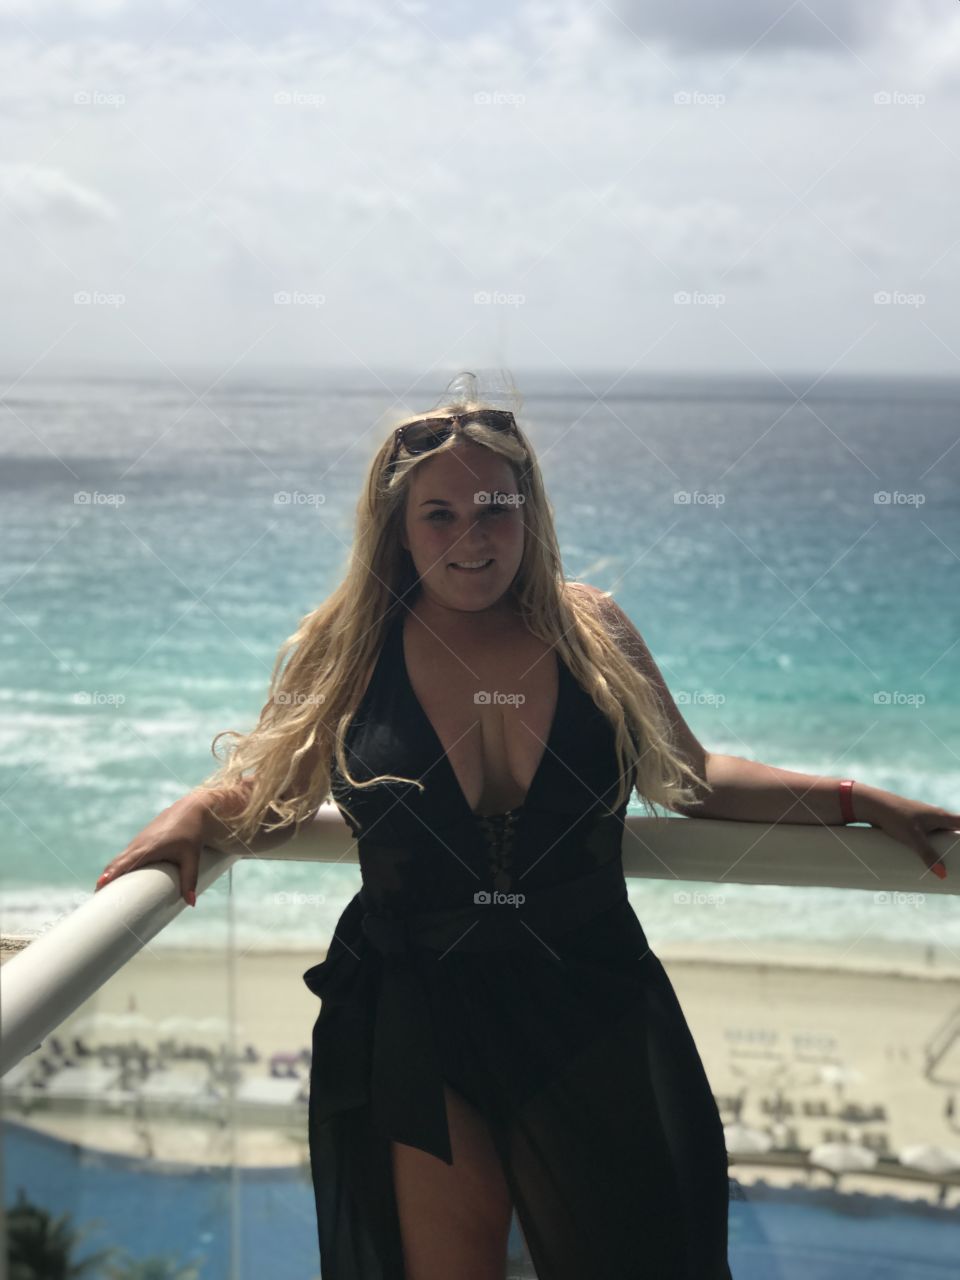 Balcony photos in cancun